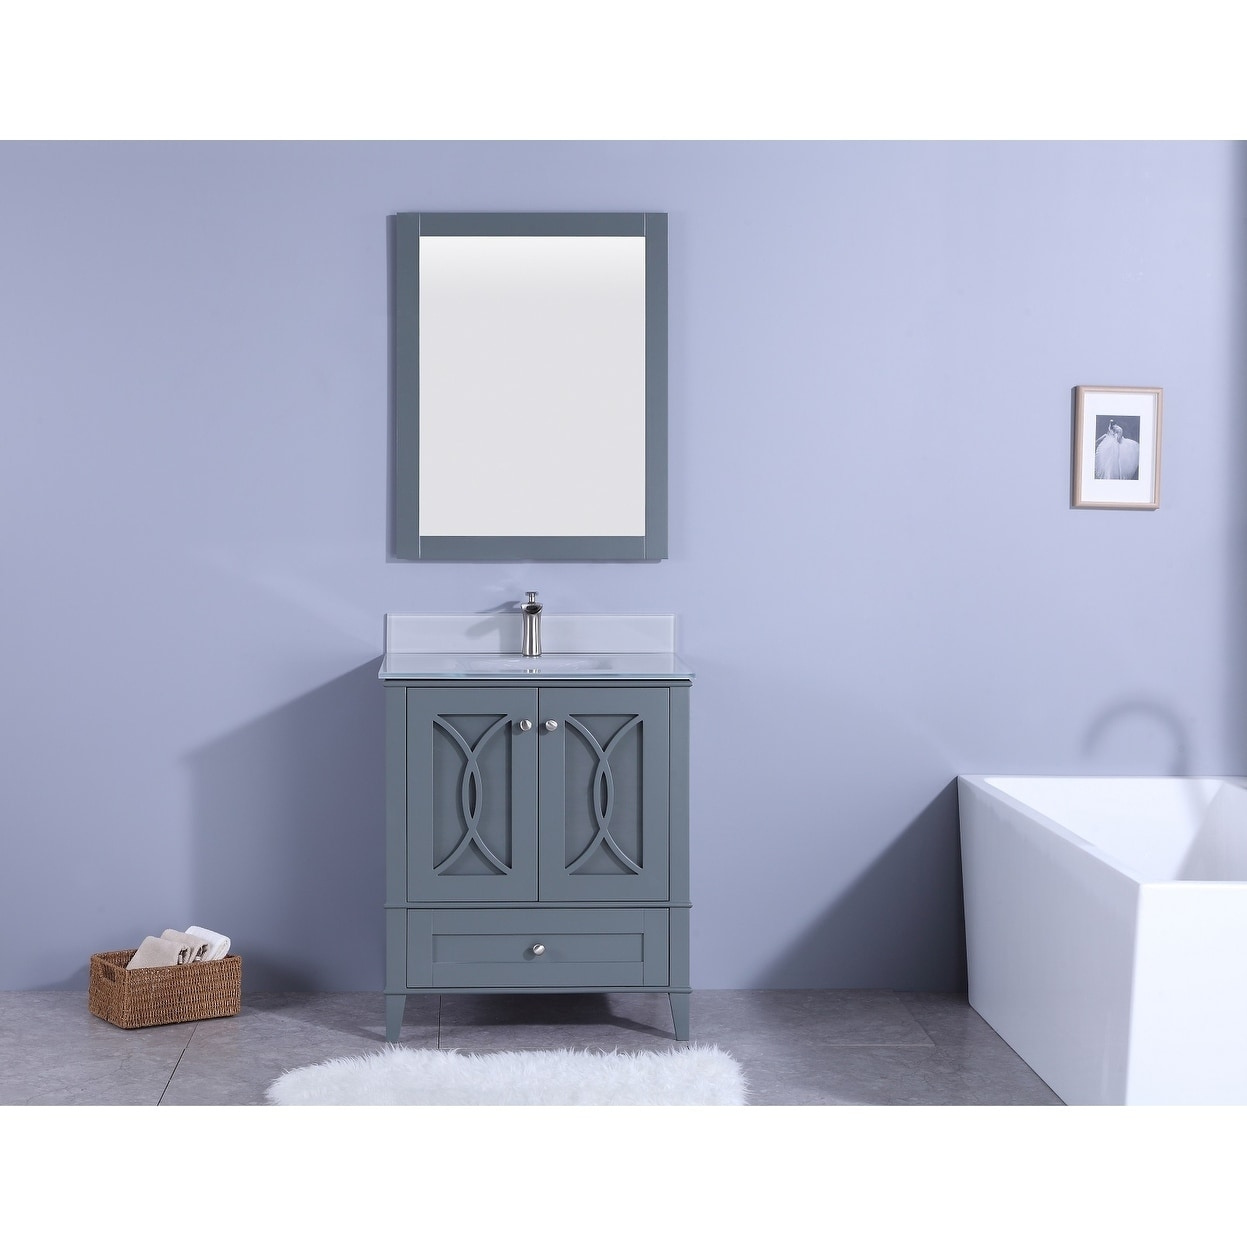 Legion Furniture 30 Inbathroom Vanity In Dark Gray With Tempered Glass Top And Mirror regarding dimensions 1247 X 1247